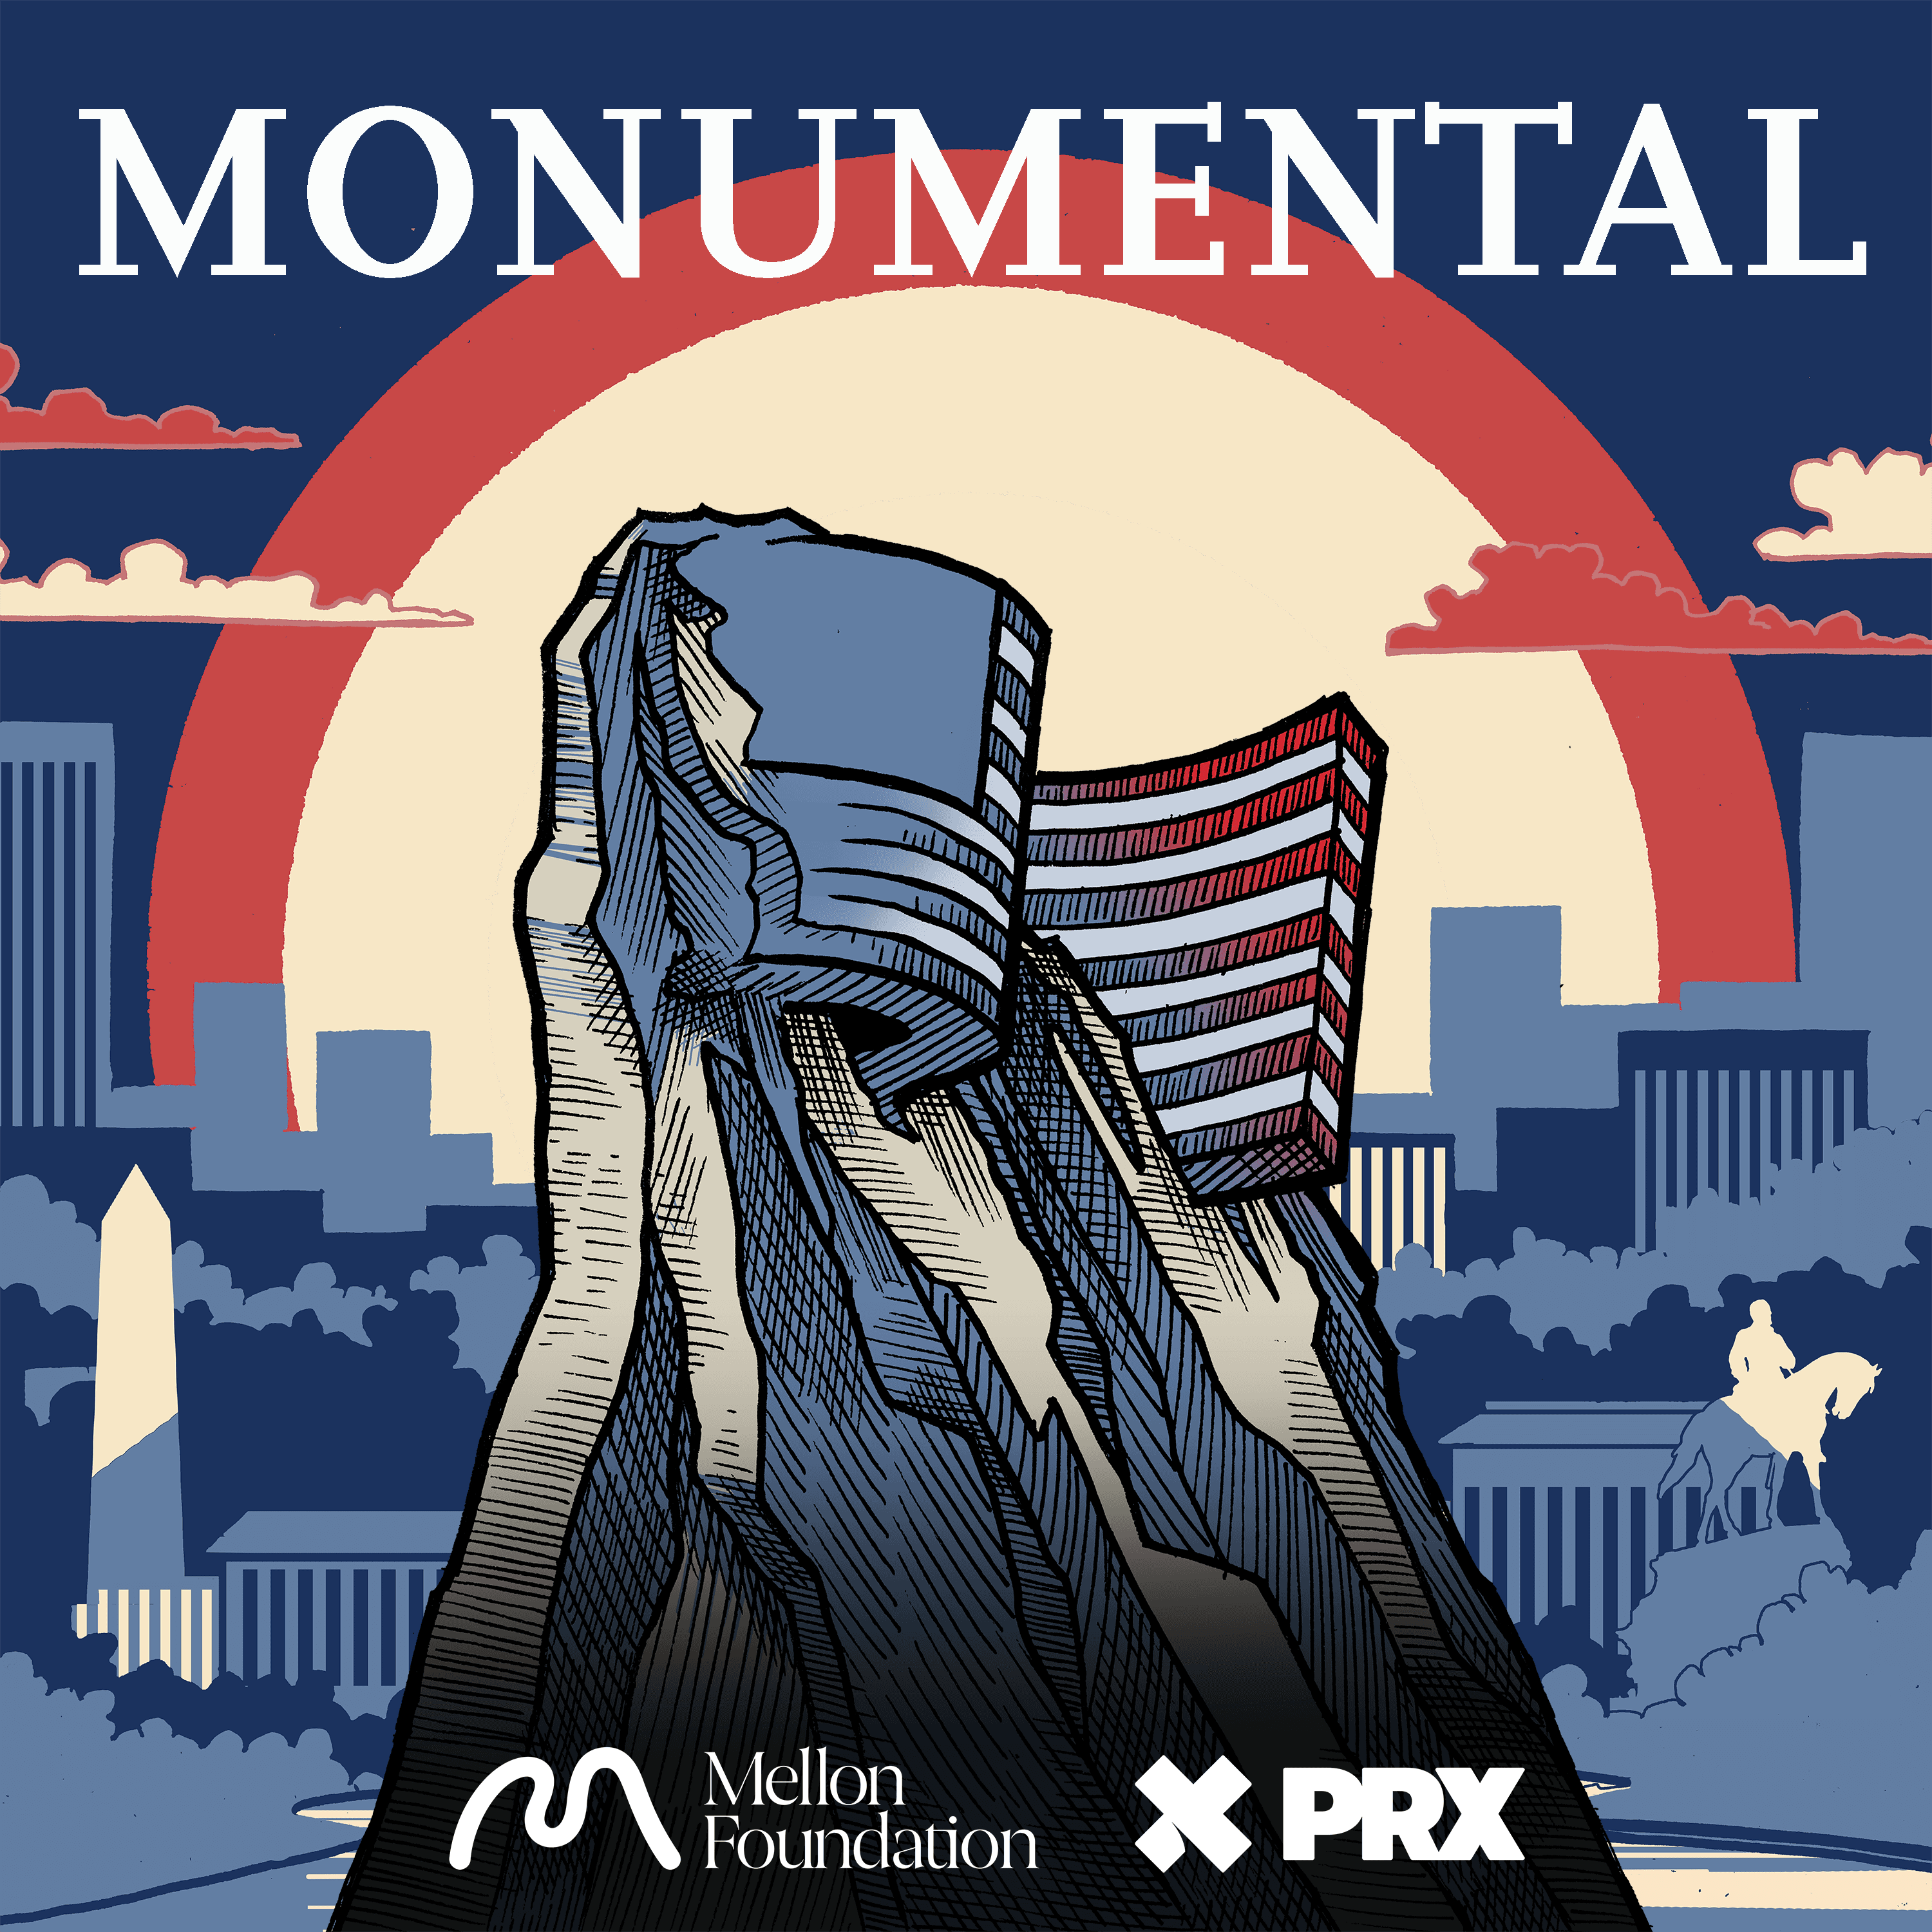 Thumbnail for "Monumental".